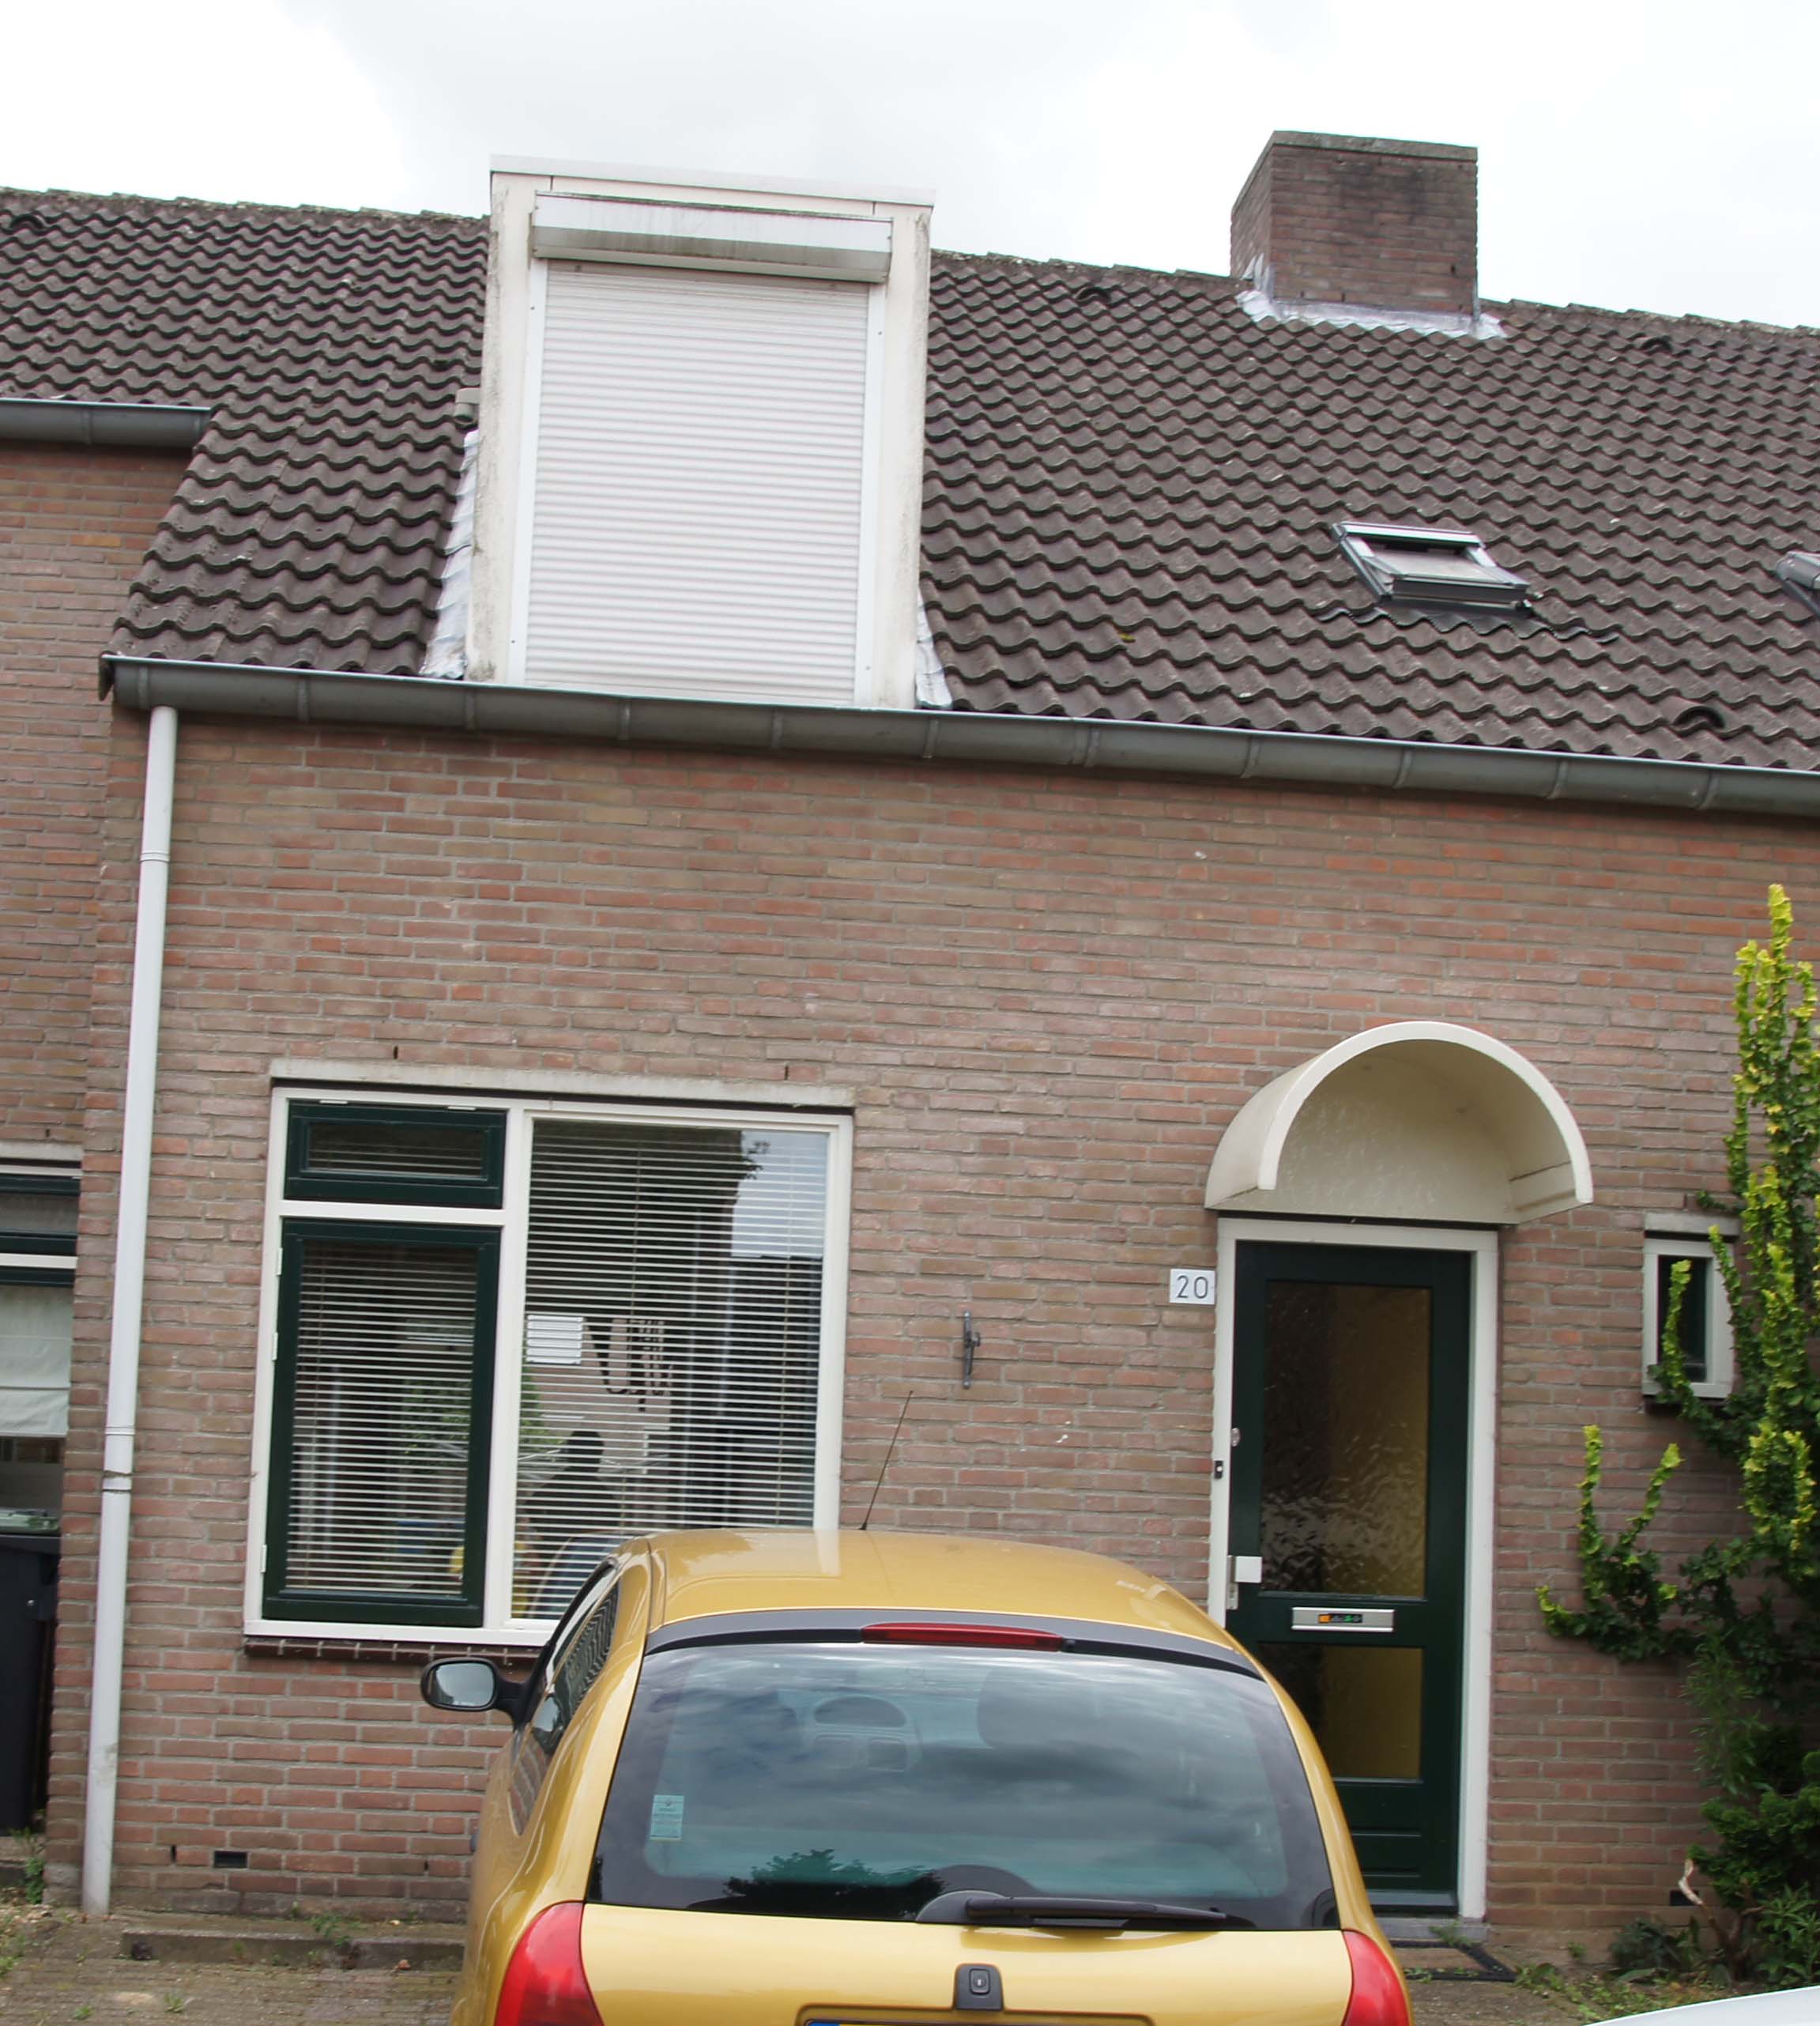 Steegstraat 20, 6129 BL Urmond, Nederland